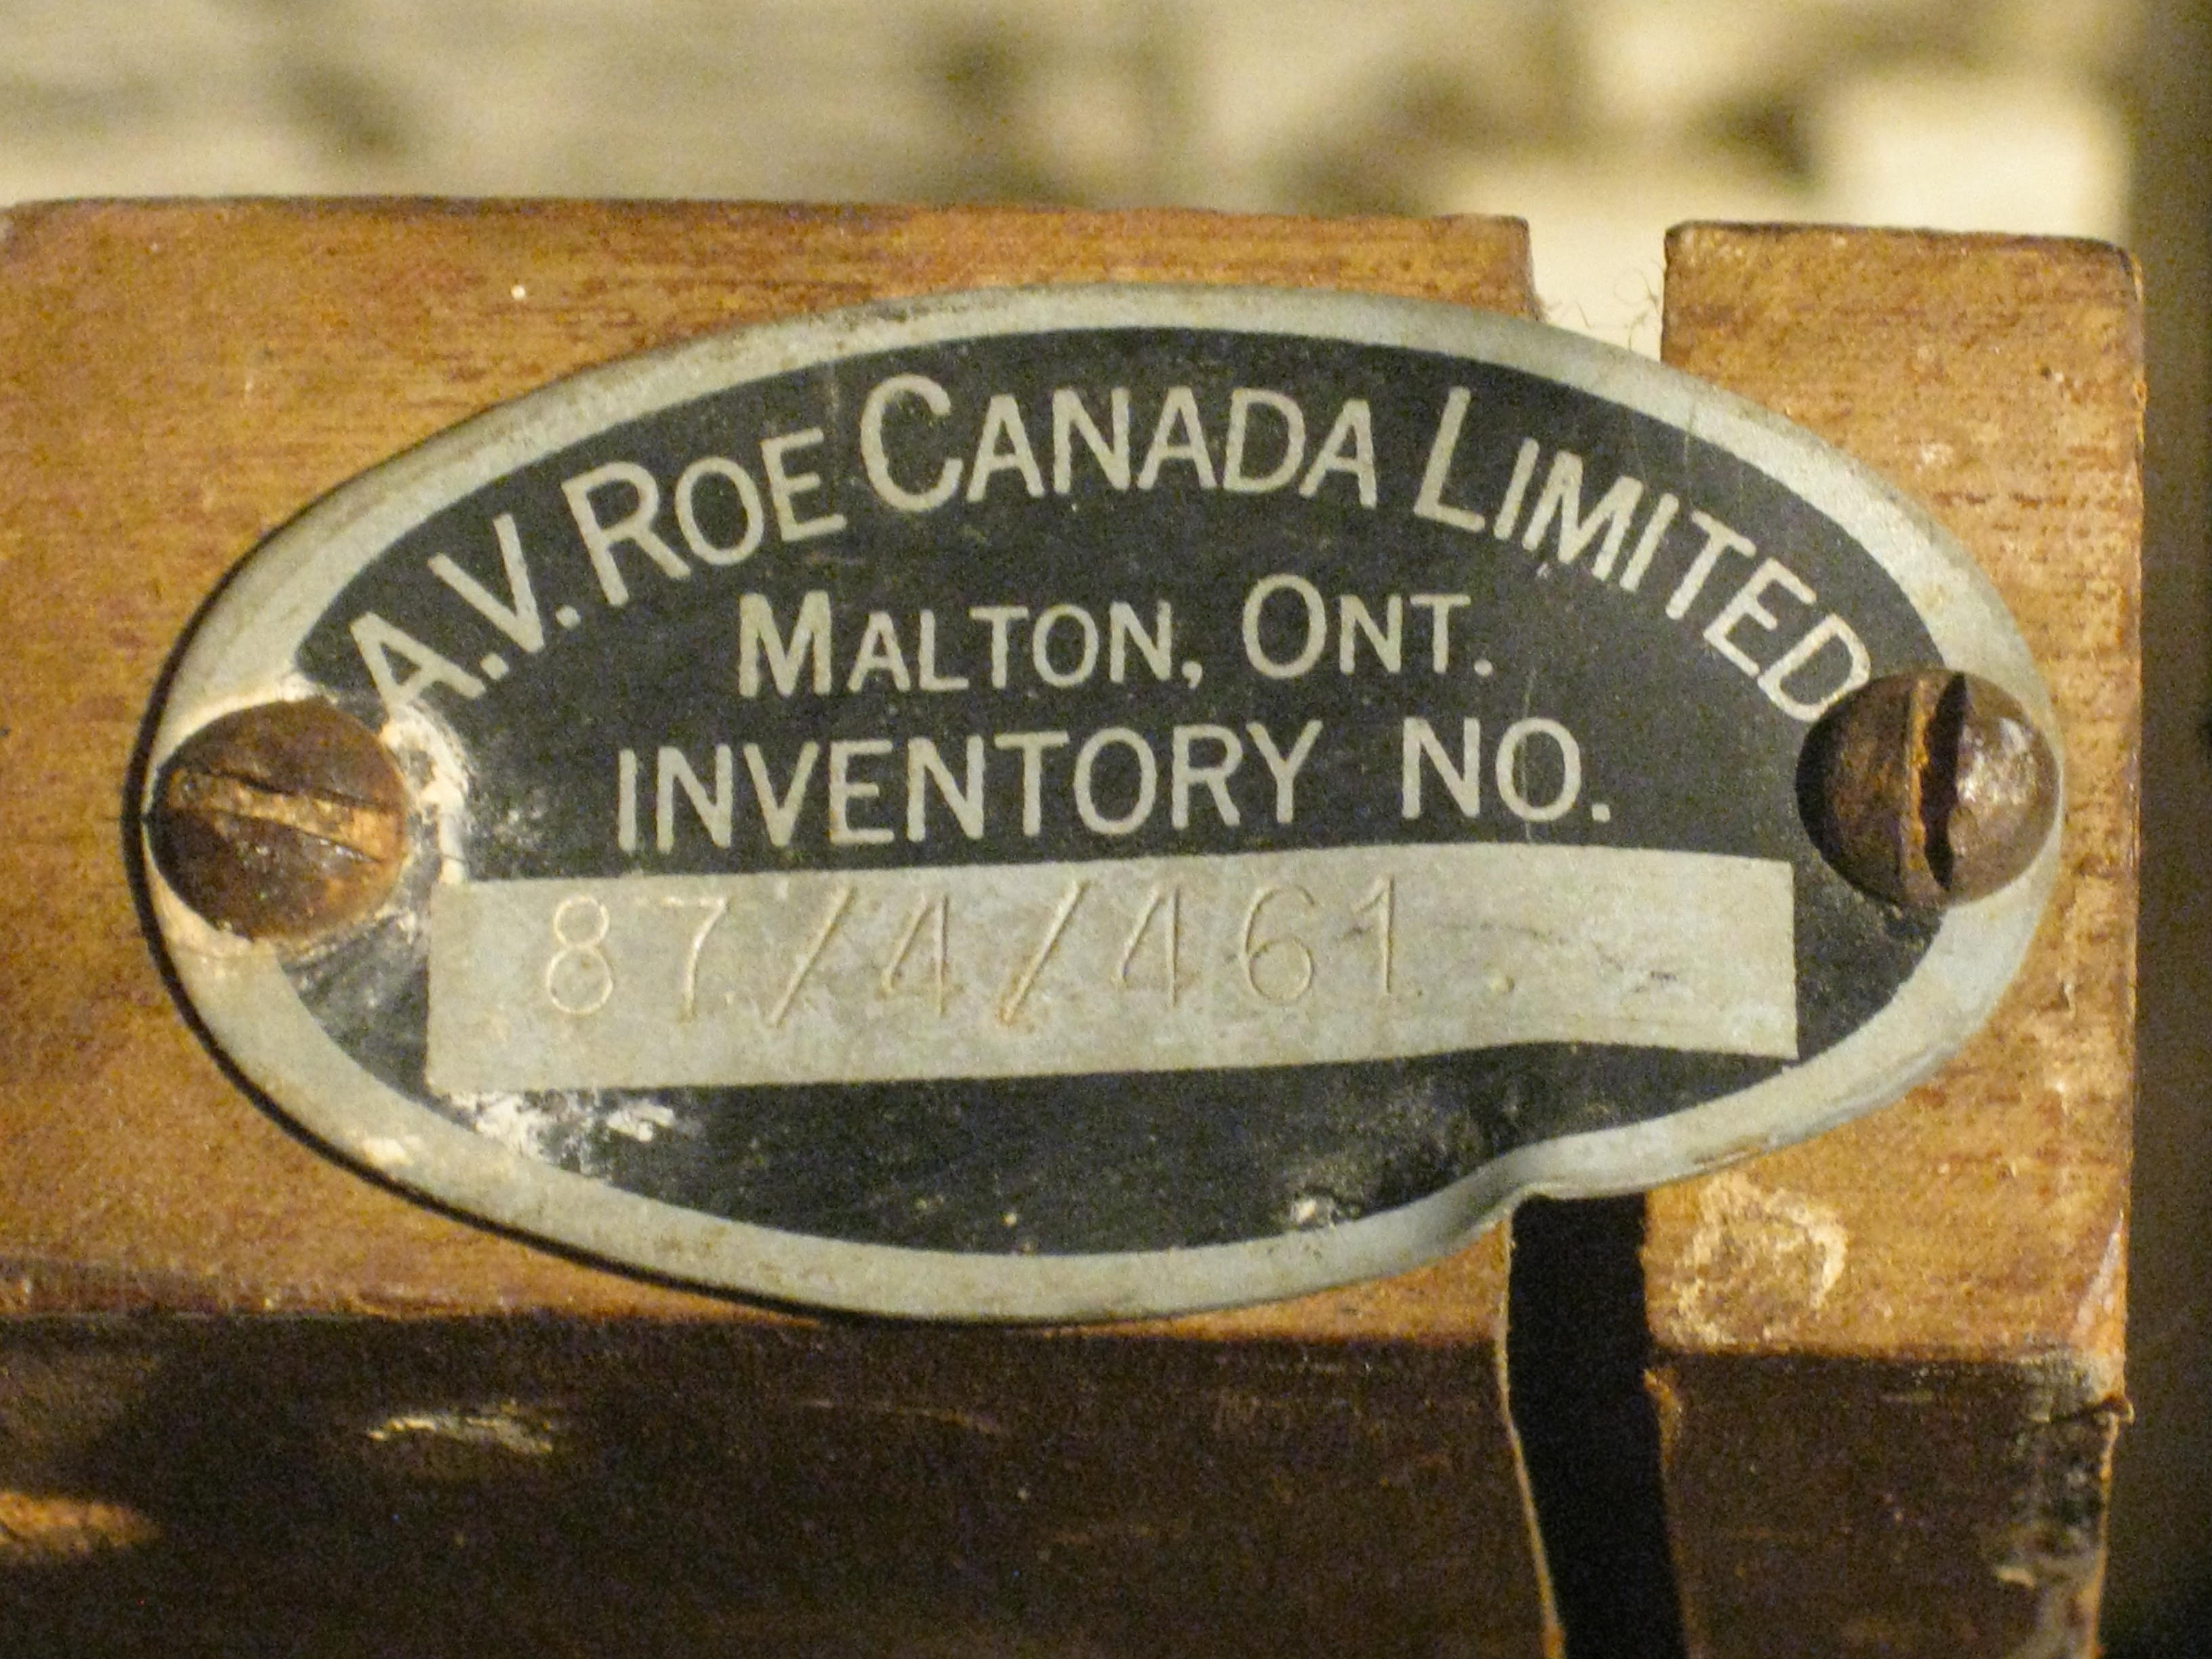 A.V. ROE Canada Limited